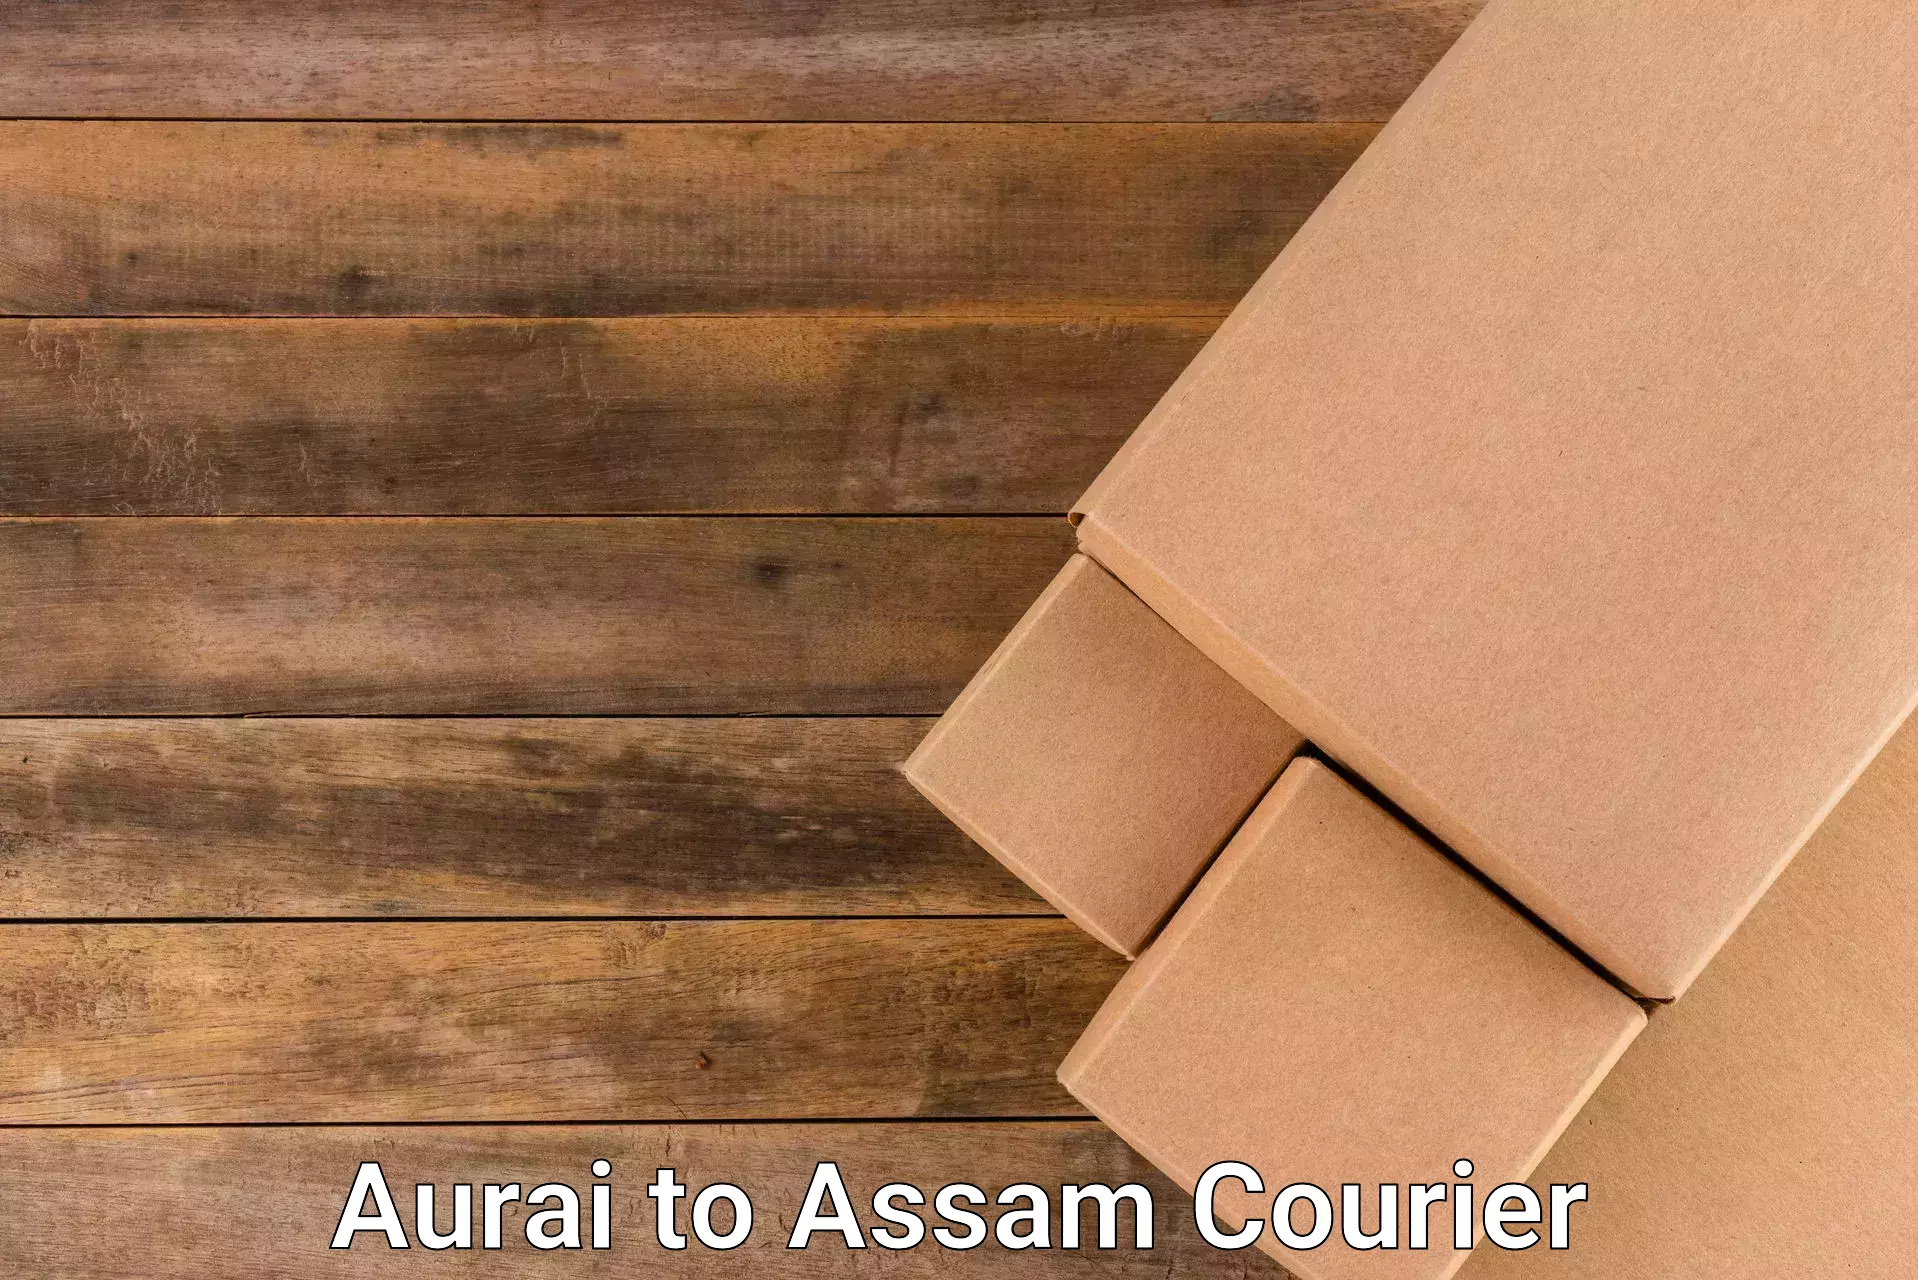 Digital courier platforms Aurai to Assam